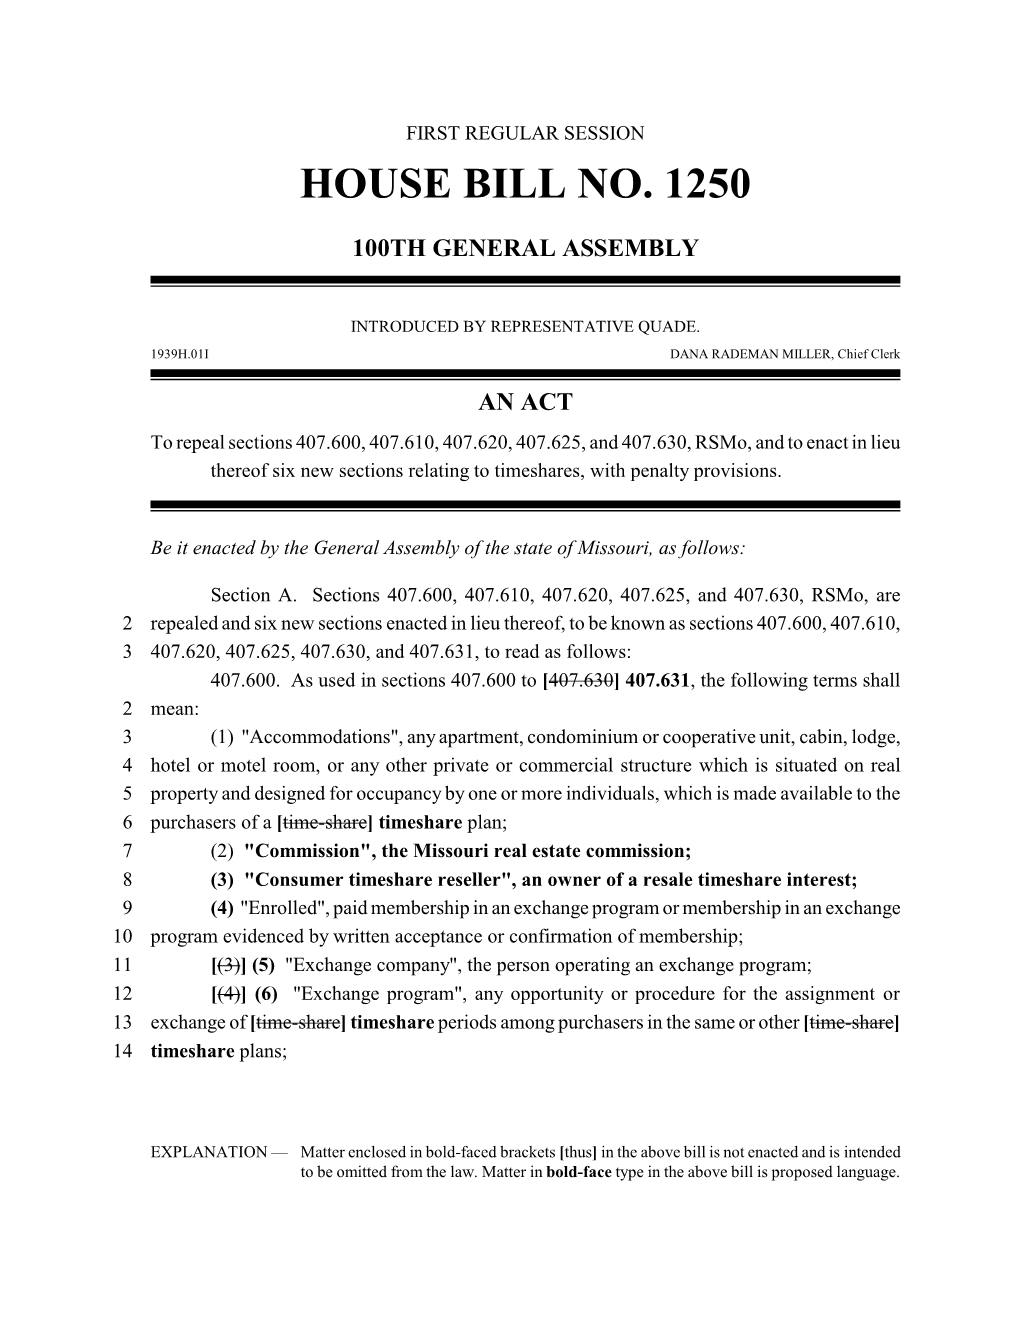 House Bill No. 1250